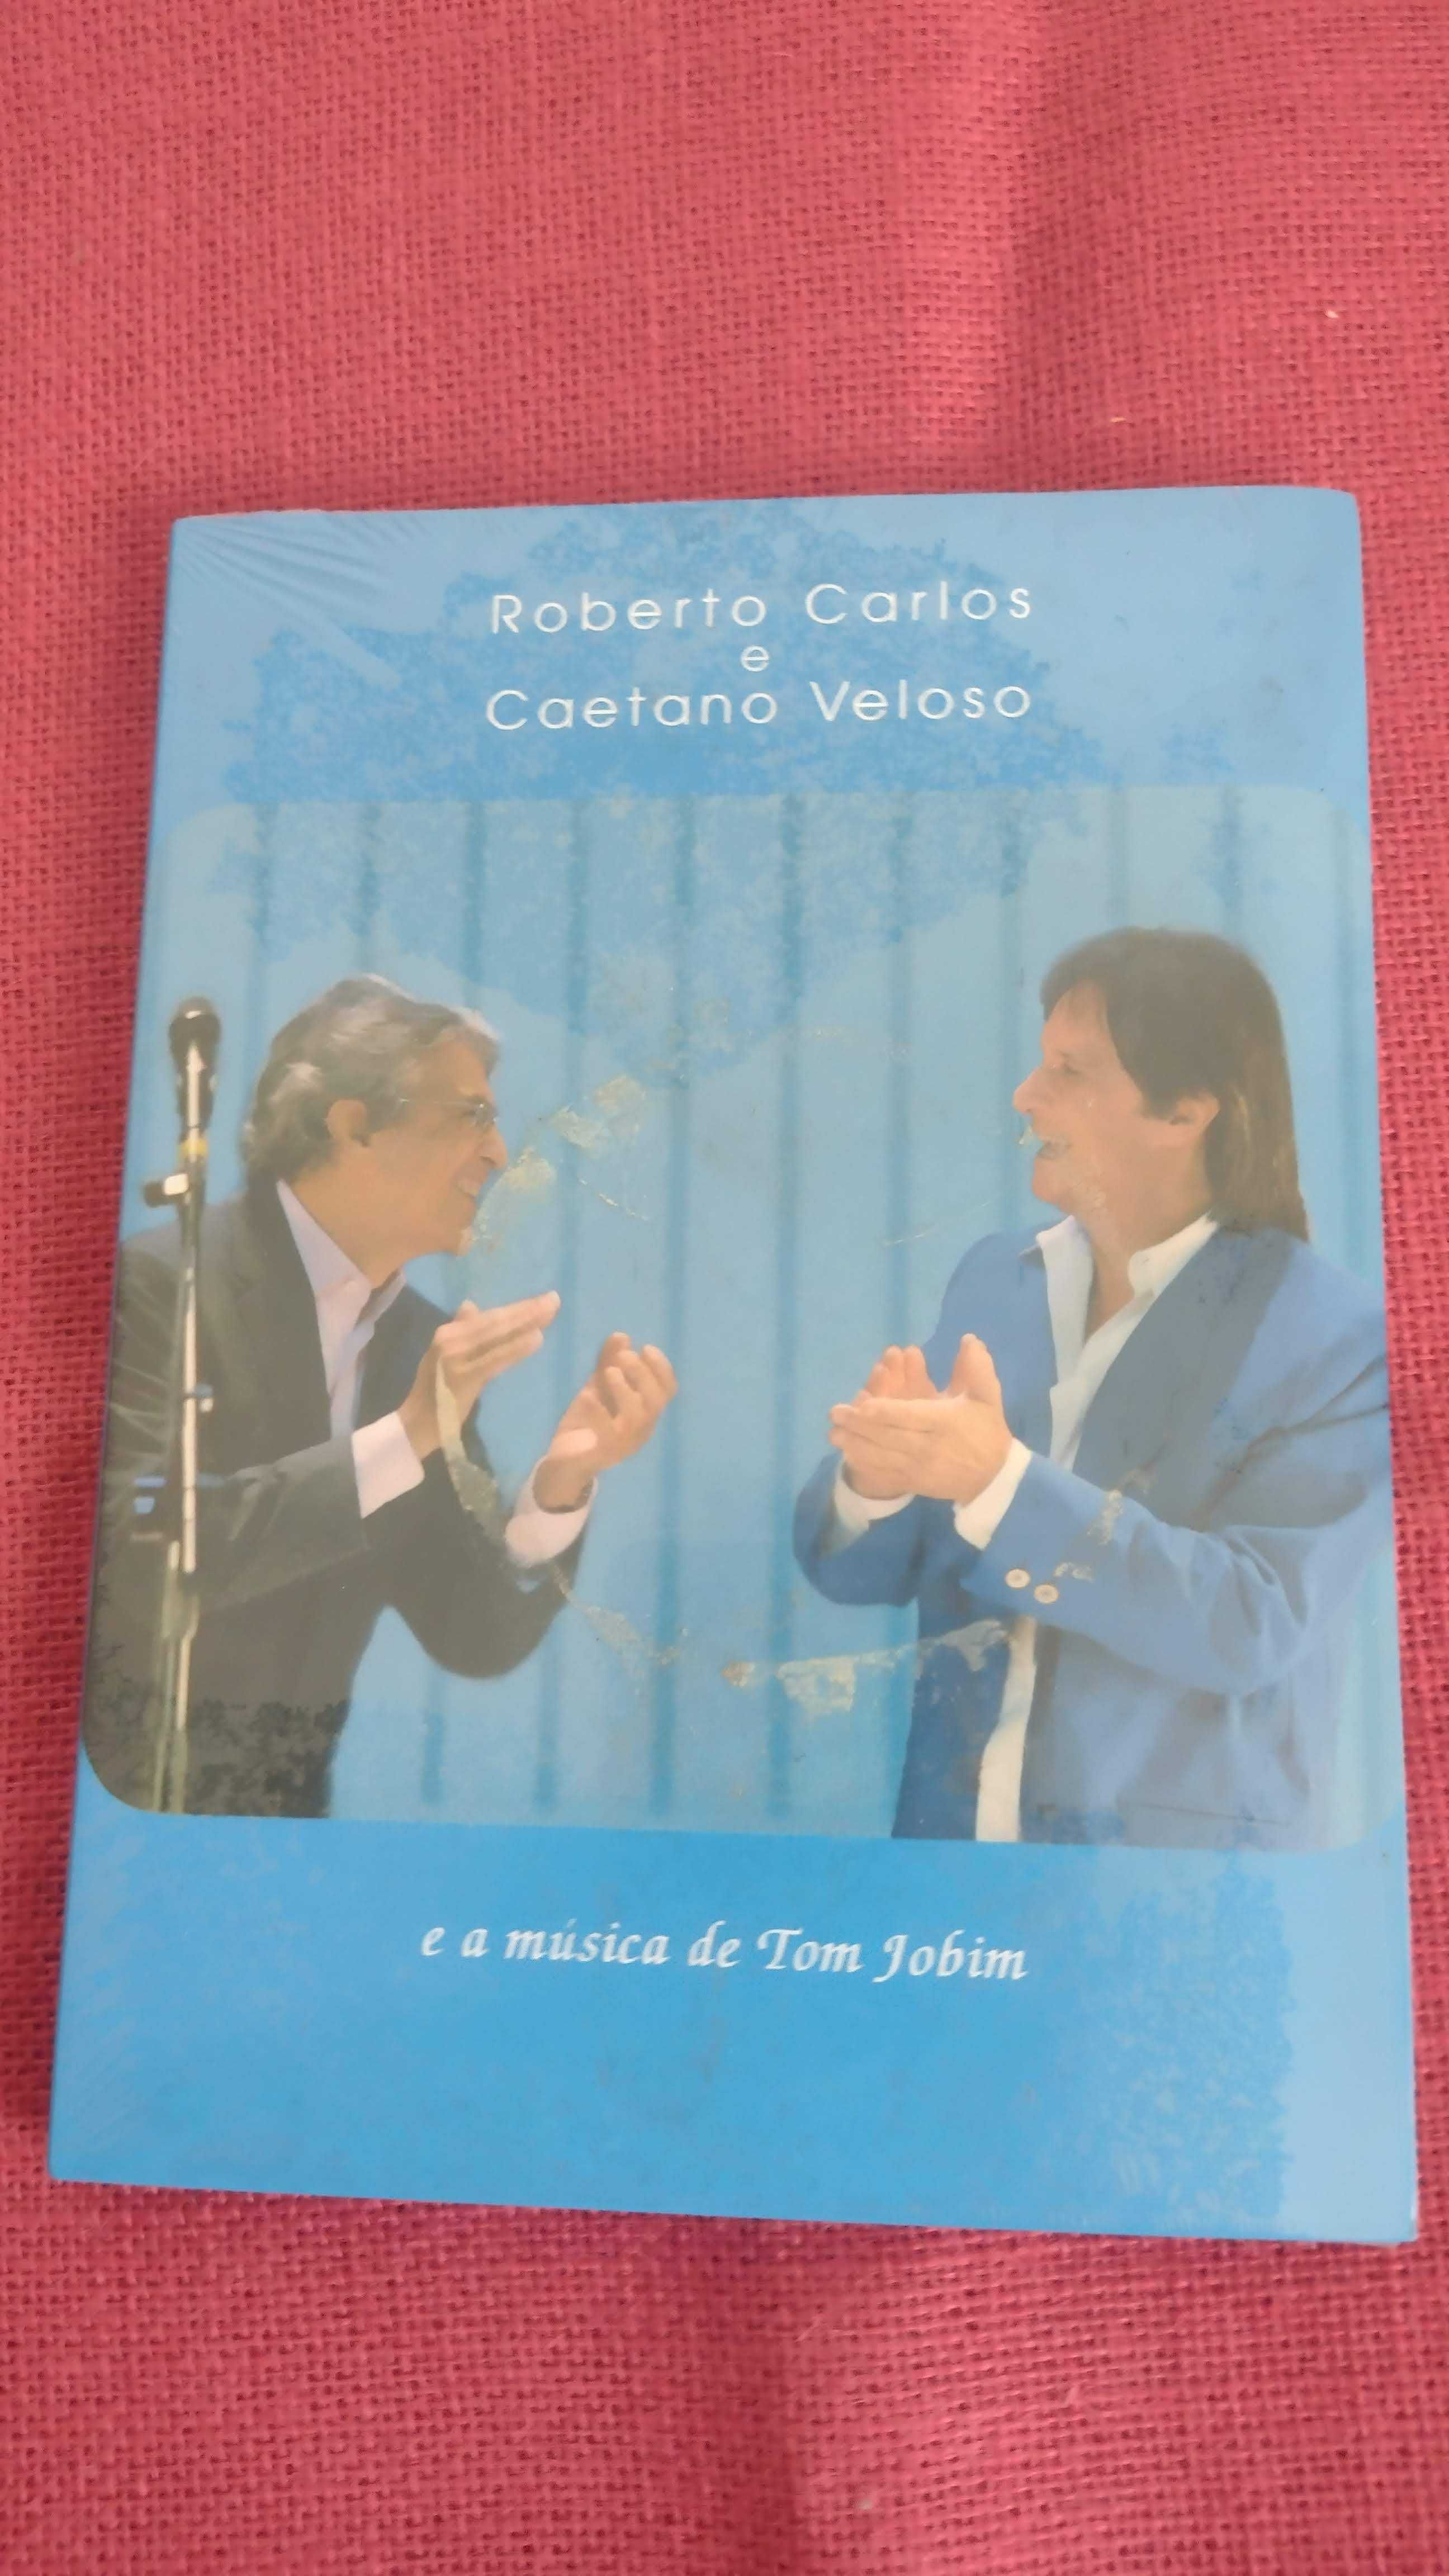 CDs Roberto Carlos "Tributo ao Rei", "Roberto Carlos e Caetano Veloso"